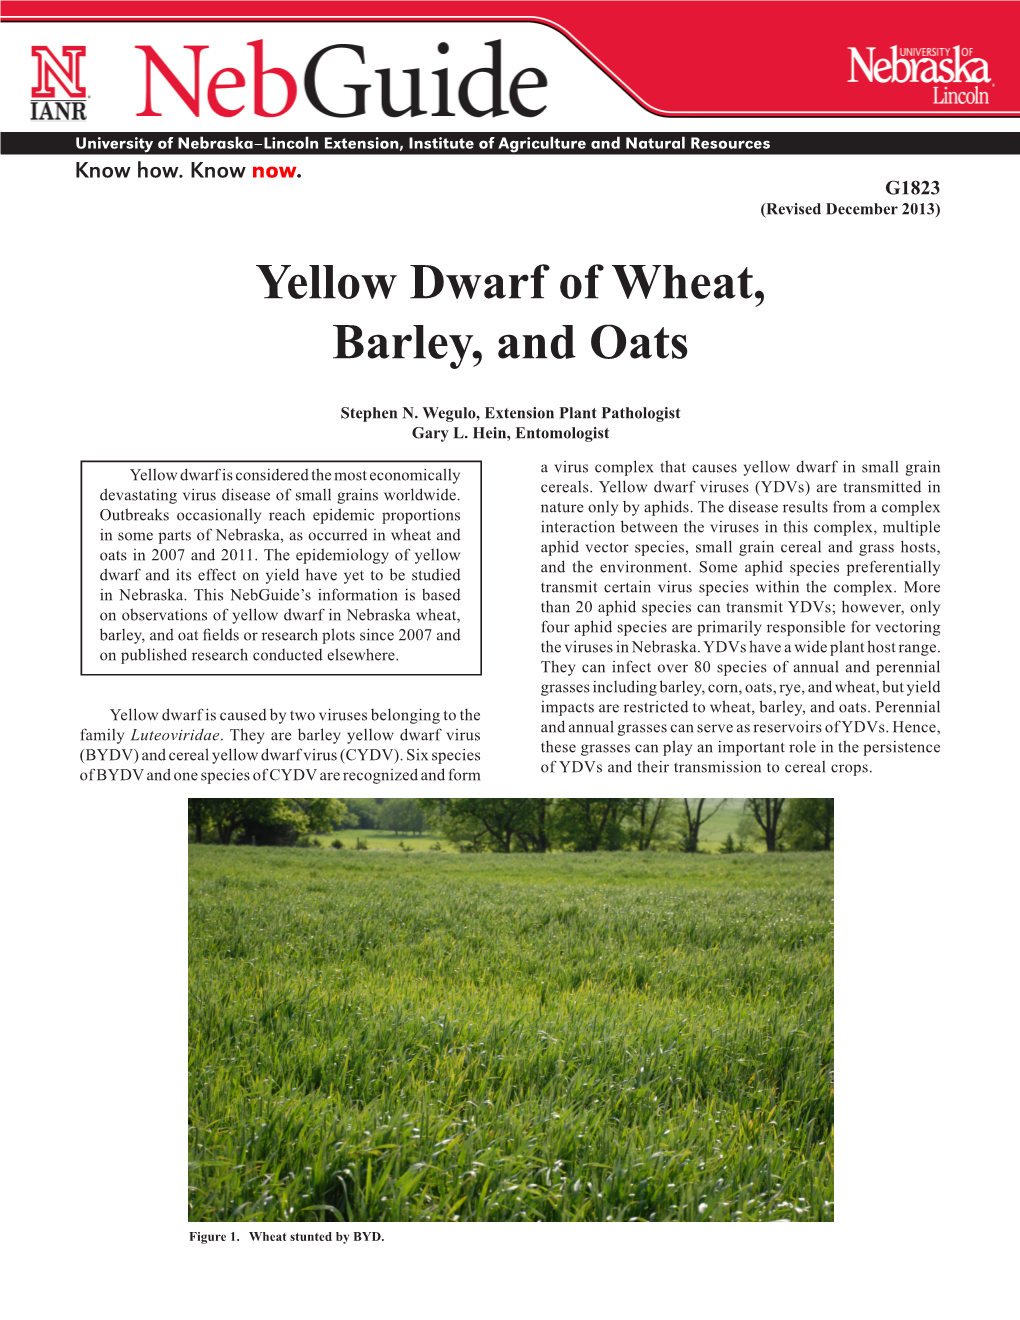 Yellow Dwarf of Wheat, Barley, and Oats